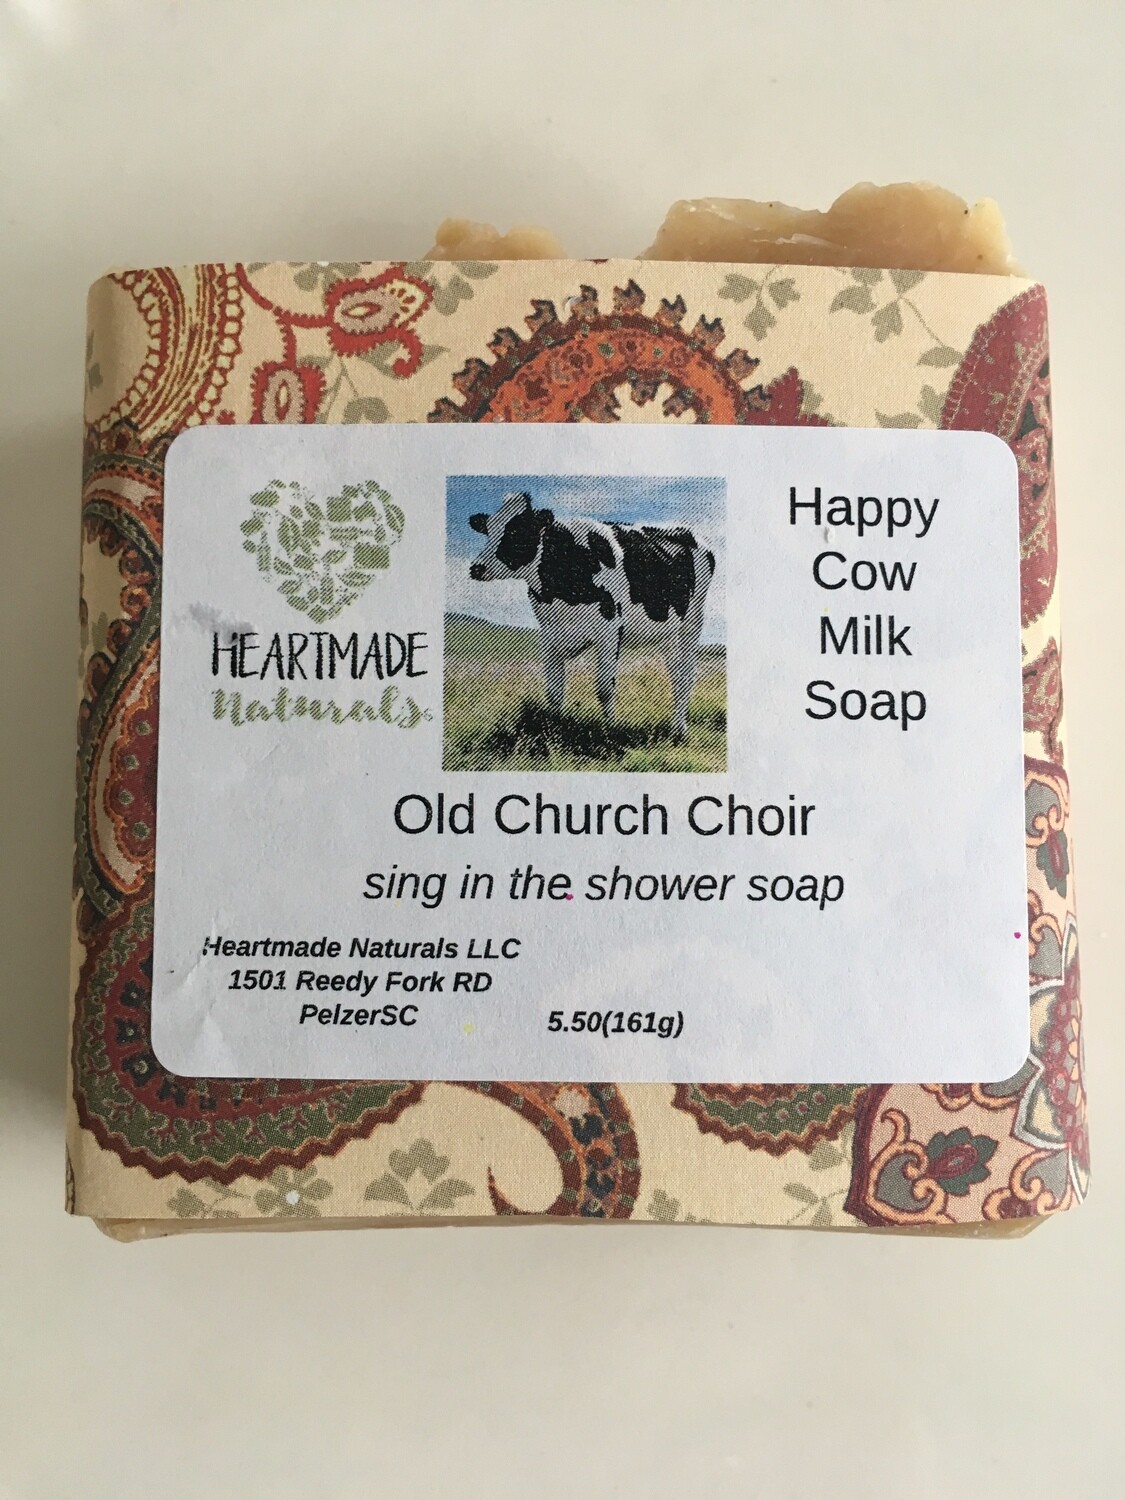 Happy Cow Milk Soap. Old church choir